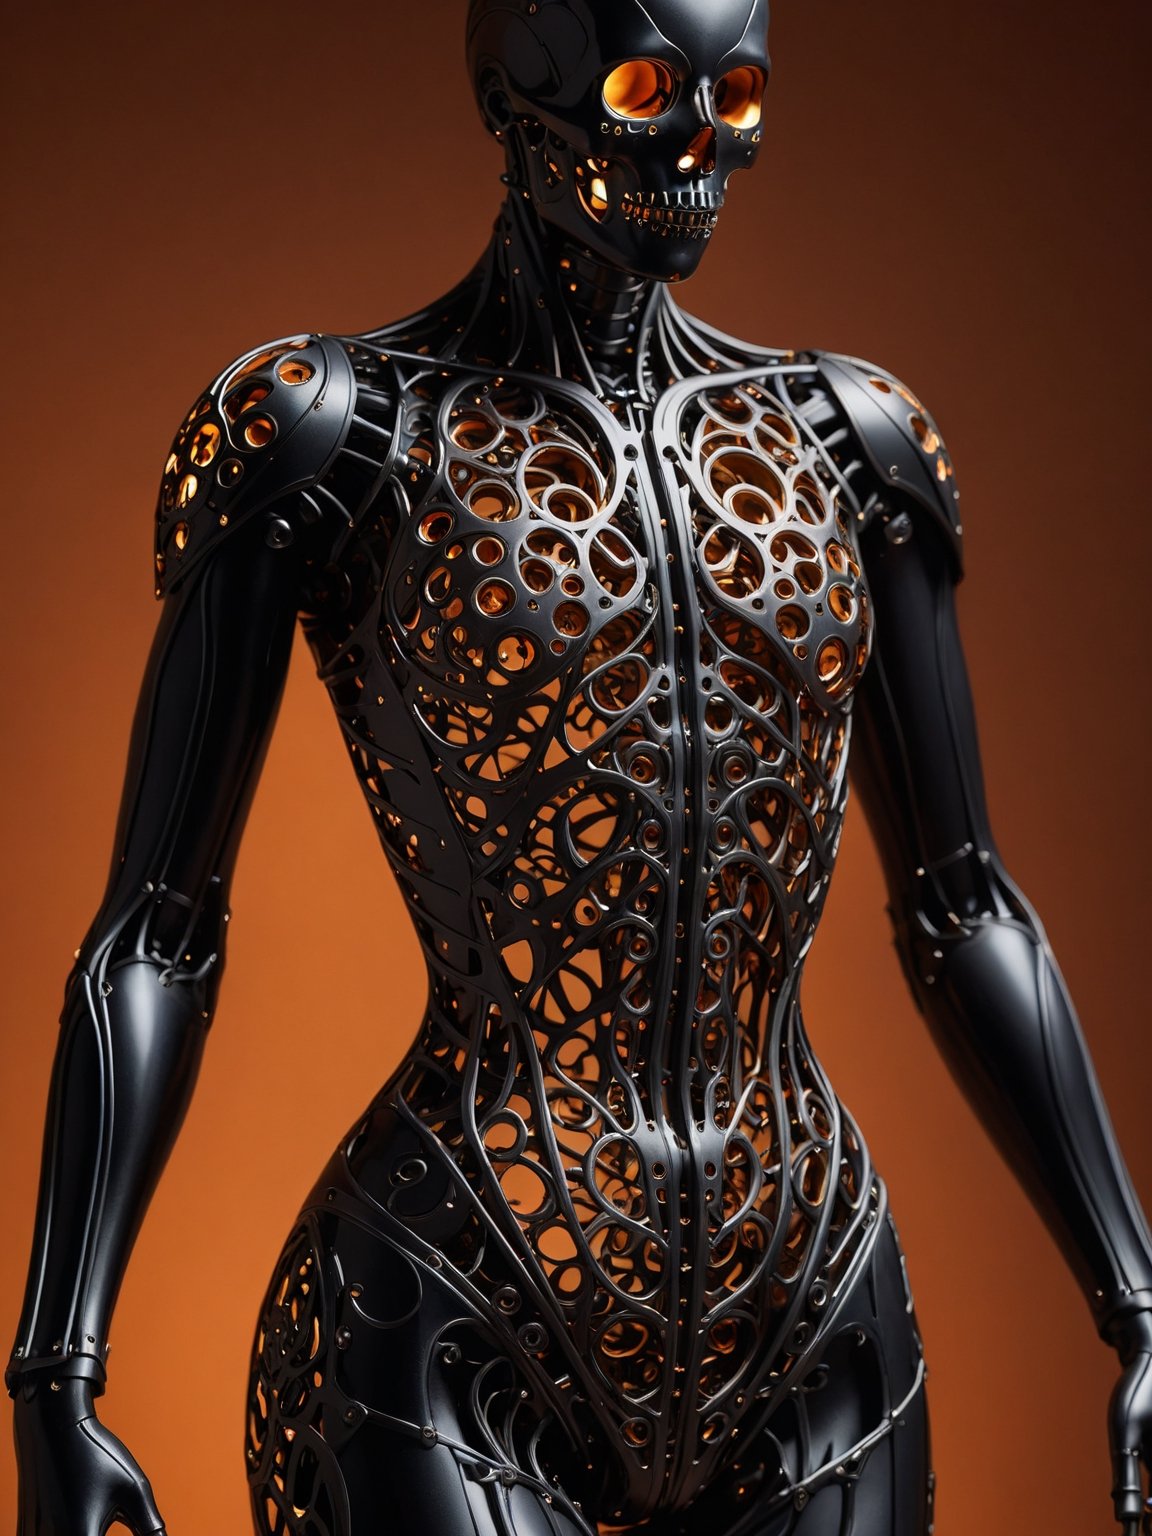 masterpiece, intricate details, dark metal black skeleton cyborg, exquisite delicate metal body structure, intricate detailed filigree delicate inner structure, (voids in body:1.5), (voids in body:1.5), (gaps in body:1.5), (holes in body:1.5), (hollows in body:1.5), close-up shot of torso, see through body, Light source from behind, orange simple background,